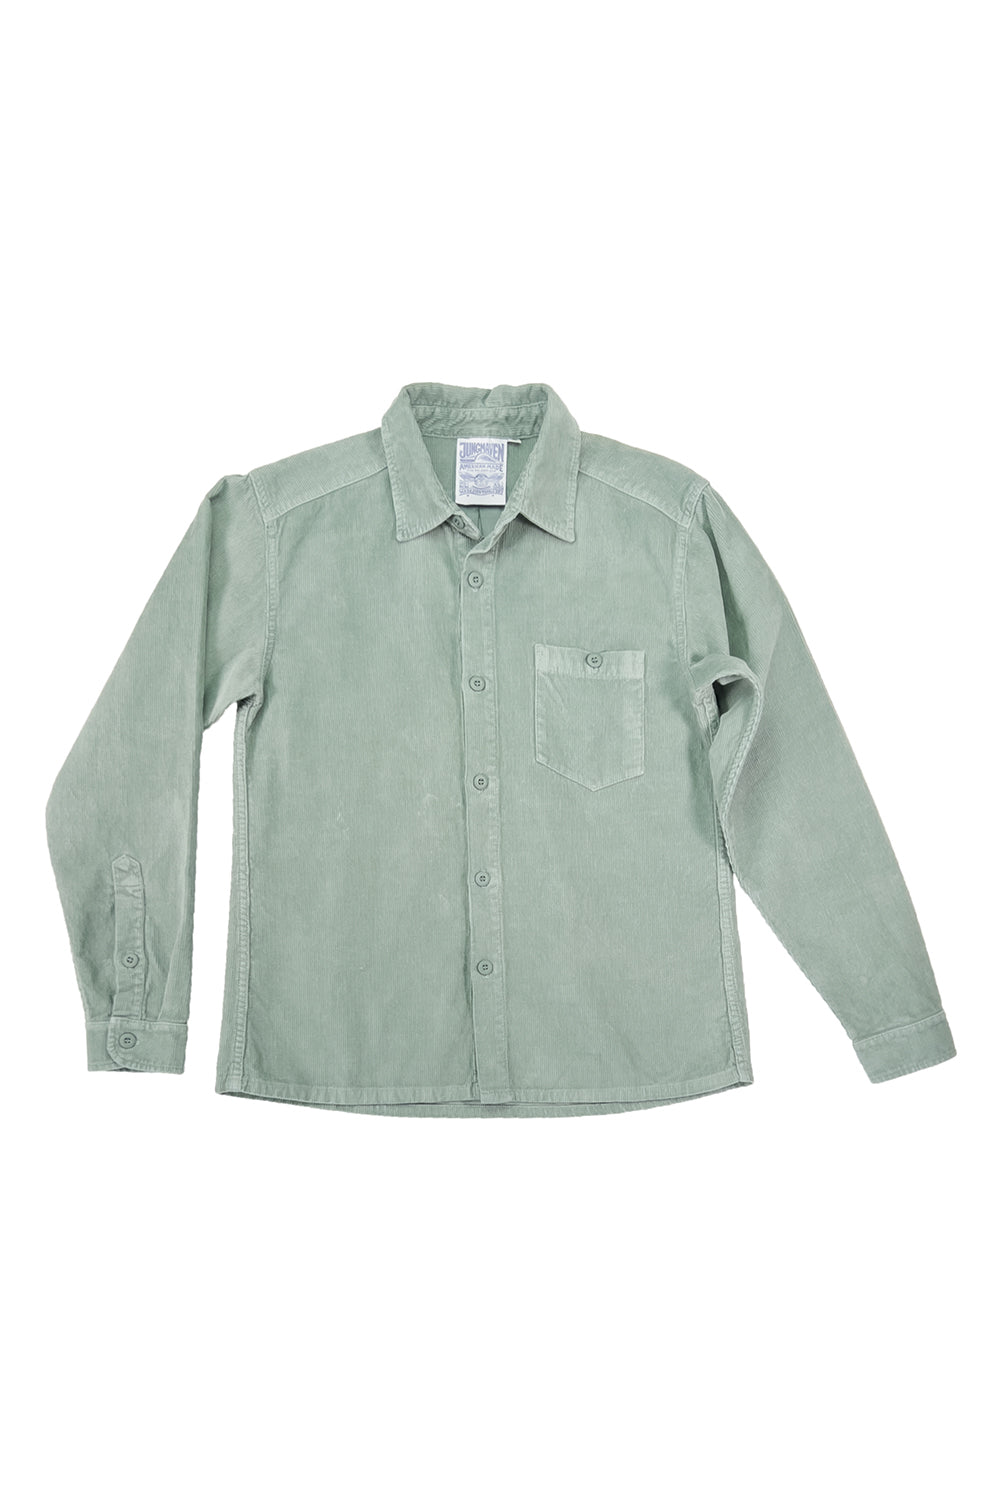 Ventura Shirt | Jungmaven Hemp Clothing & Accessories / Color: Clay Green